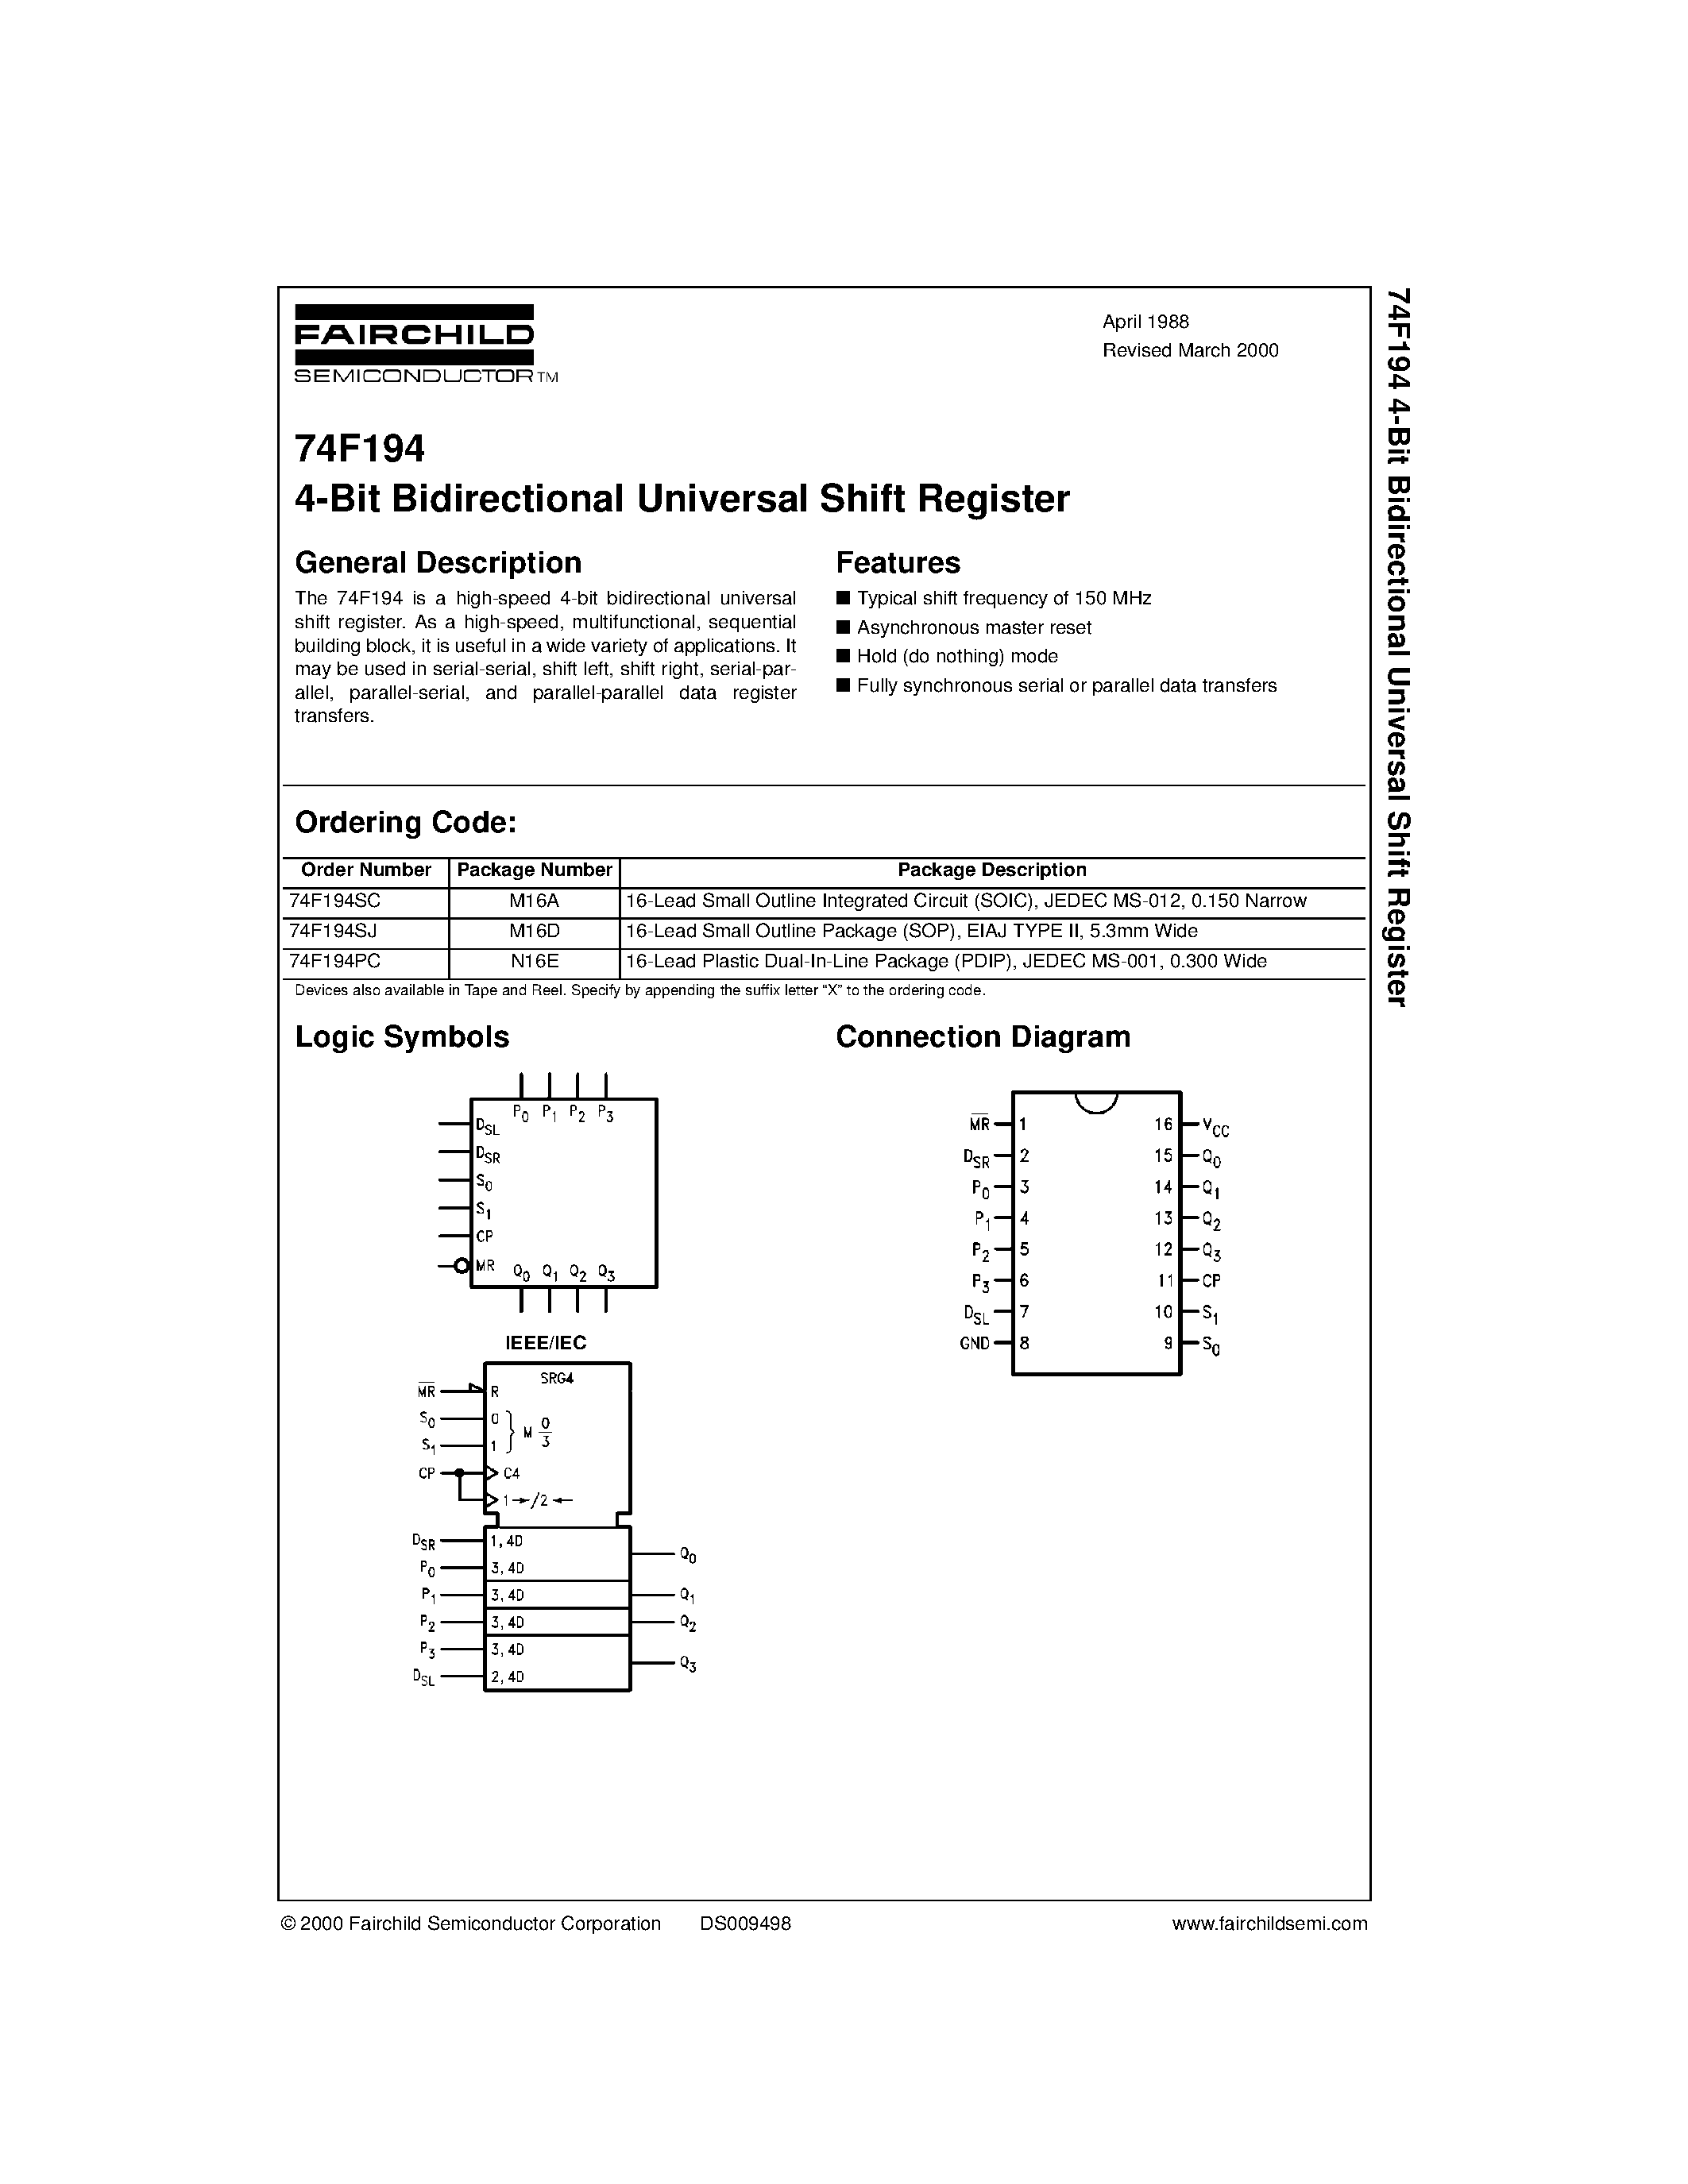 Datasheet 74F194PC - 4-Bit Bidirectional Universal Shift Register page 1